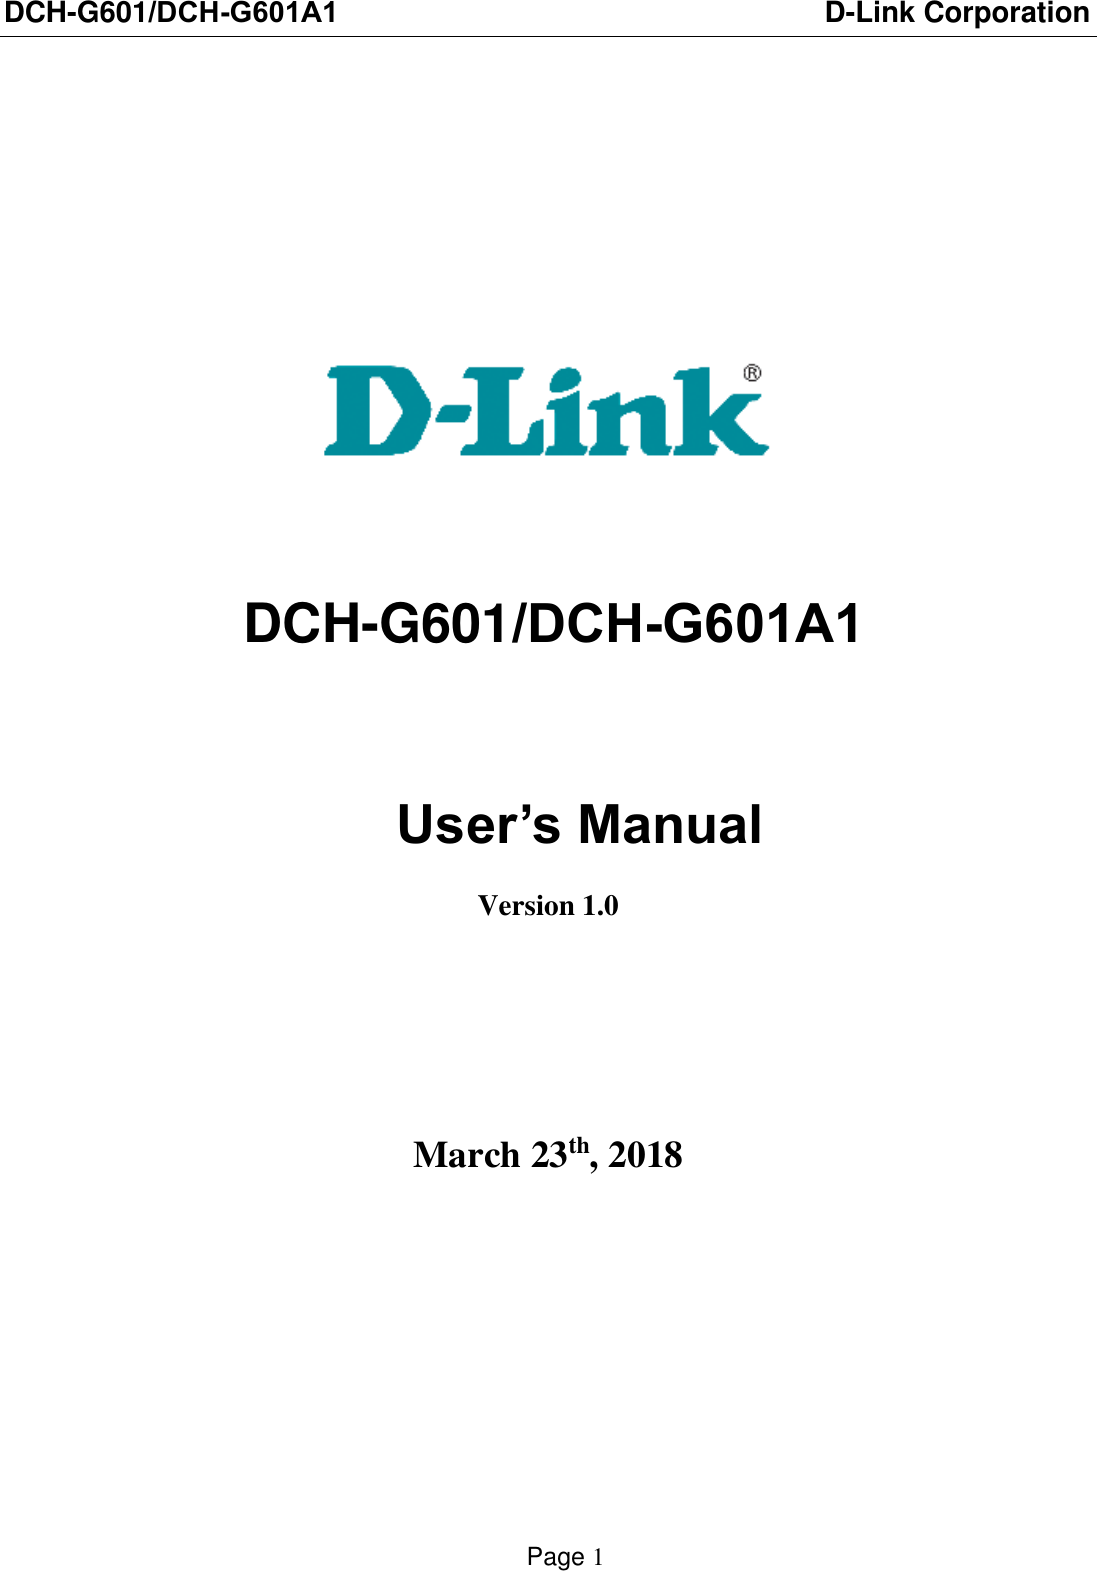 DCH-G601/DCH-G601A1 D-Link CorporationPage 1 DCH-G601/DCH-G601A1User’s ManualVersion 1.0March 23th, 2018